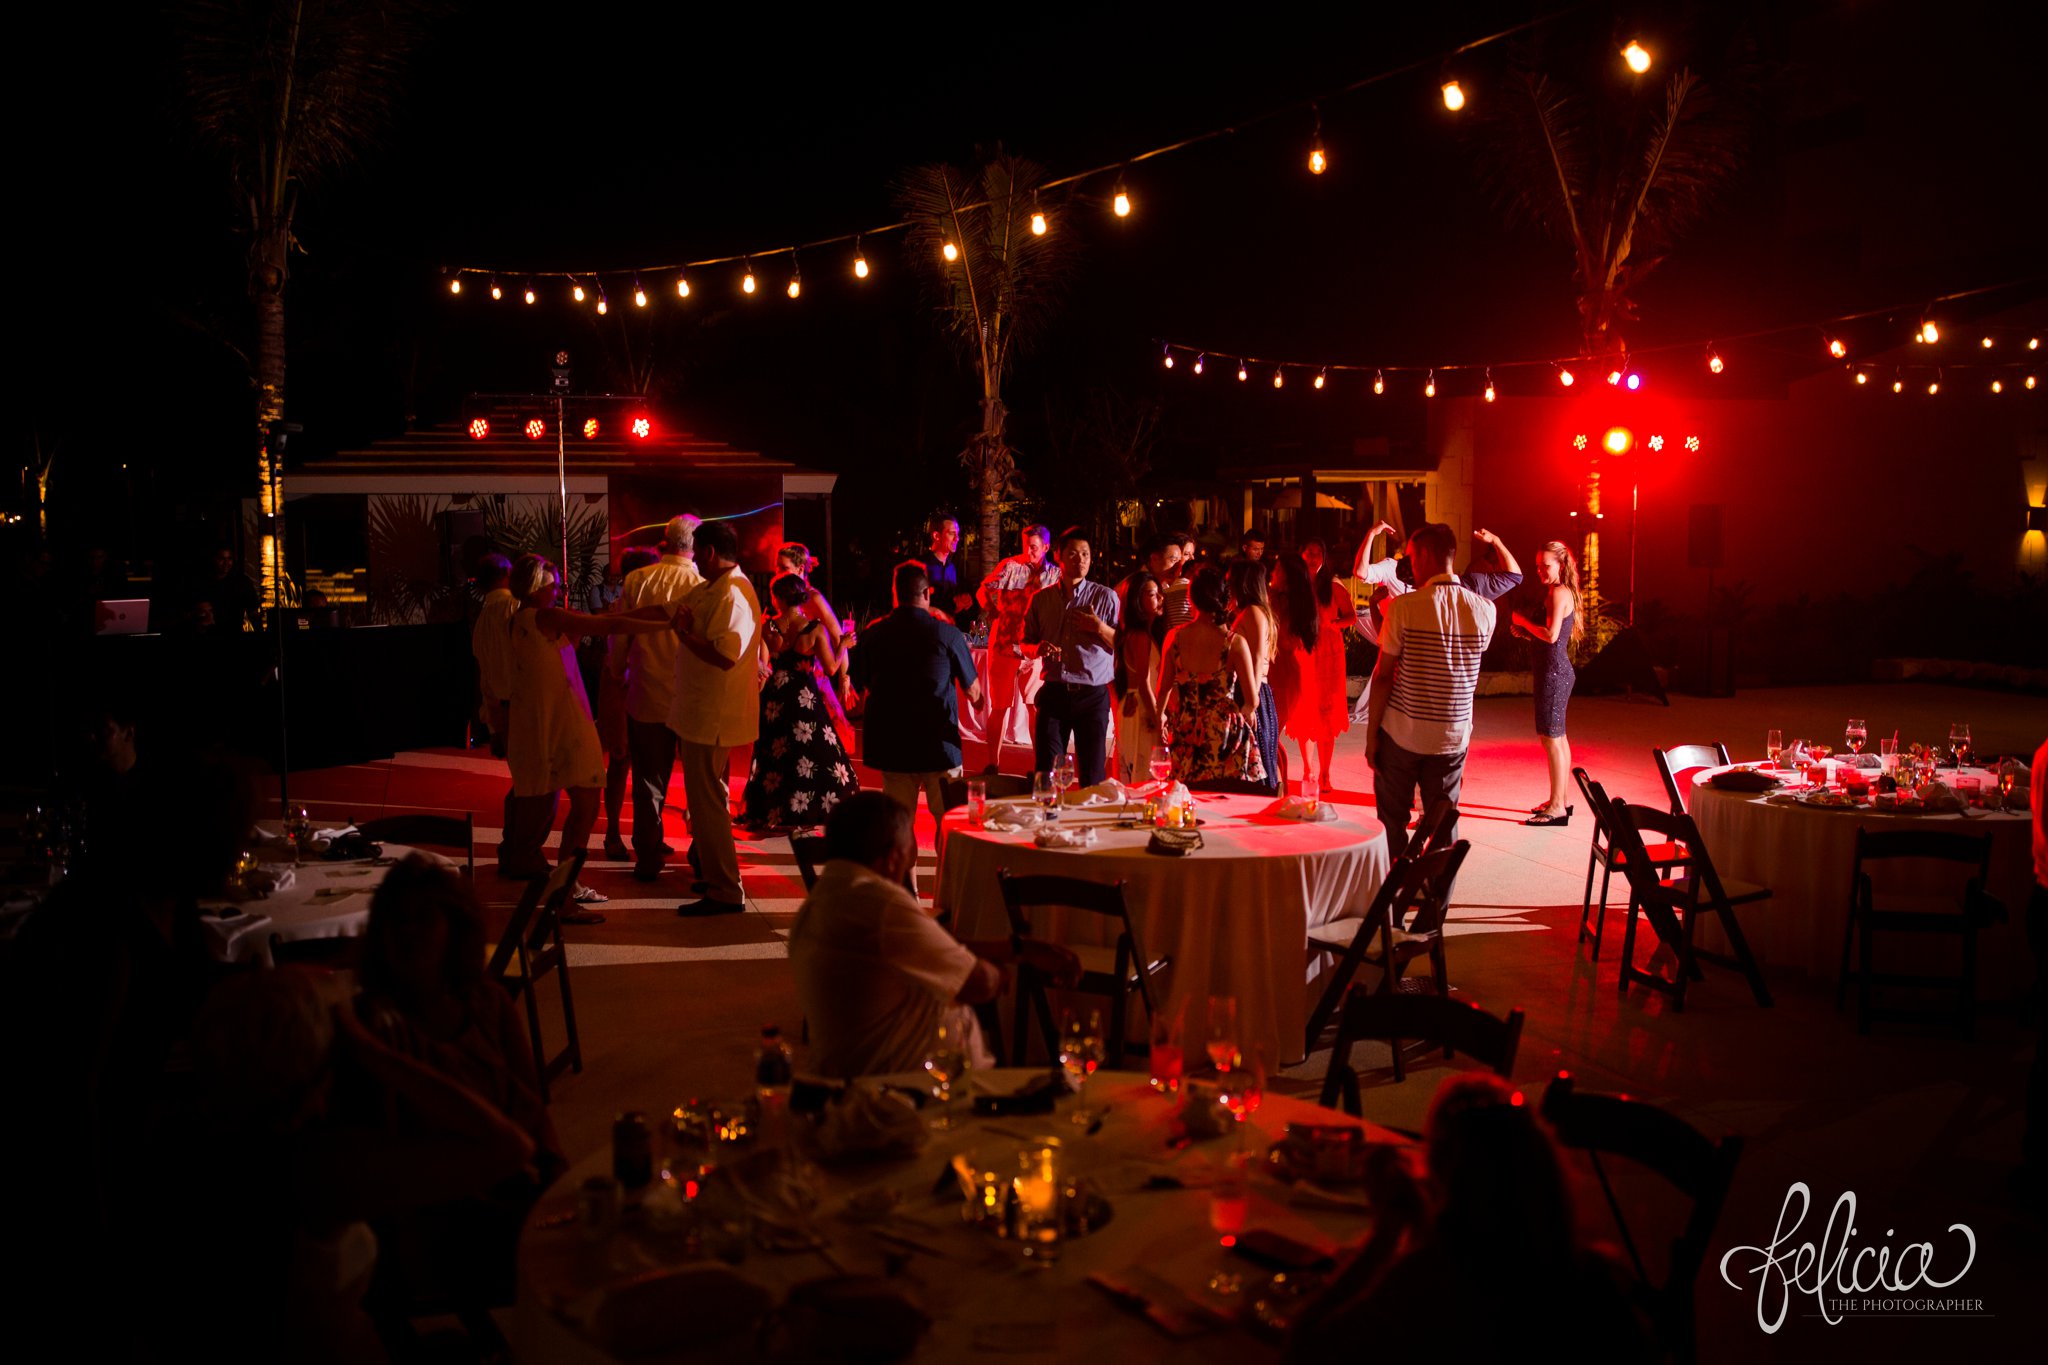 images by feliciathephotographer.com | Destination Beach Wedding | Unicco 20 87 | Photographer | L&S Travel | reception | dance party | bride | groom | dj | lights | guests | friends | family | silly | true love | venue 